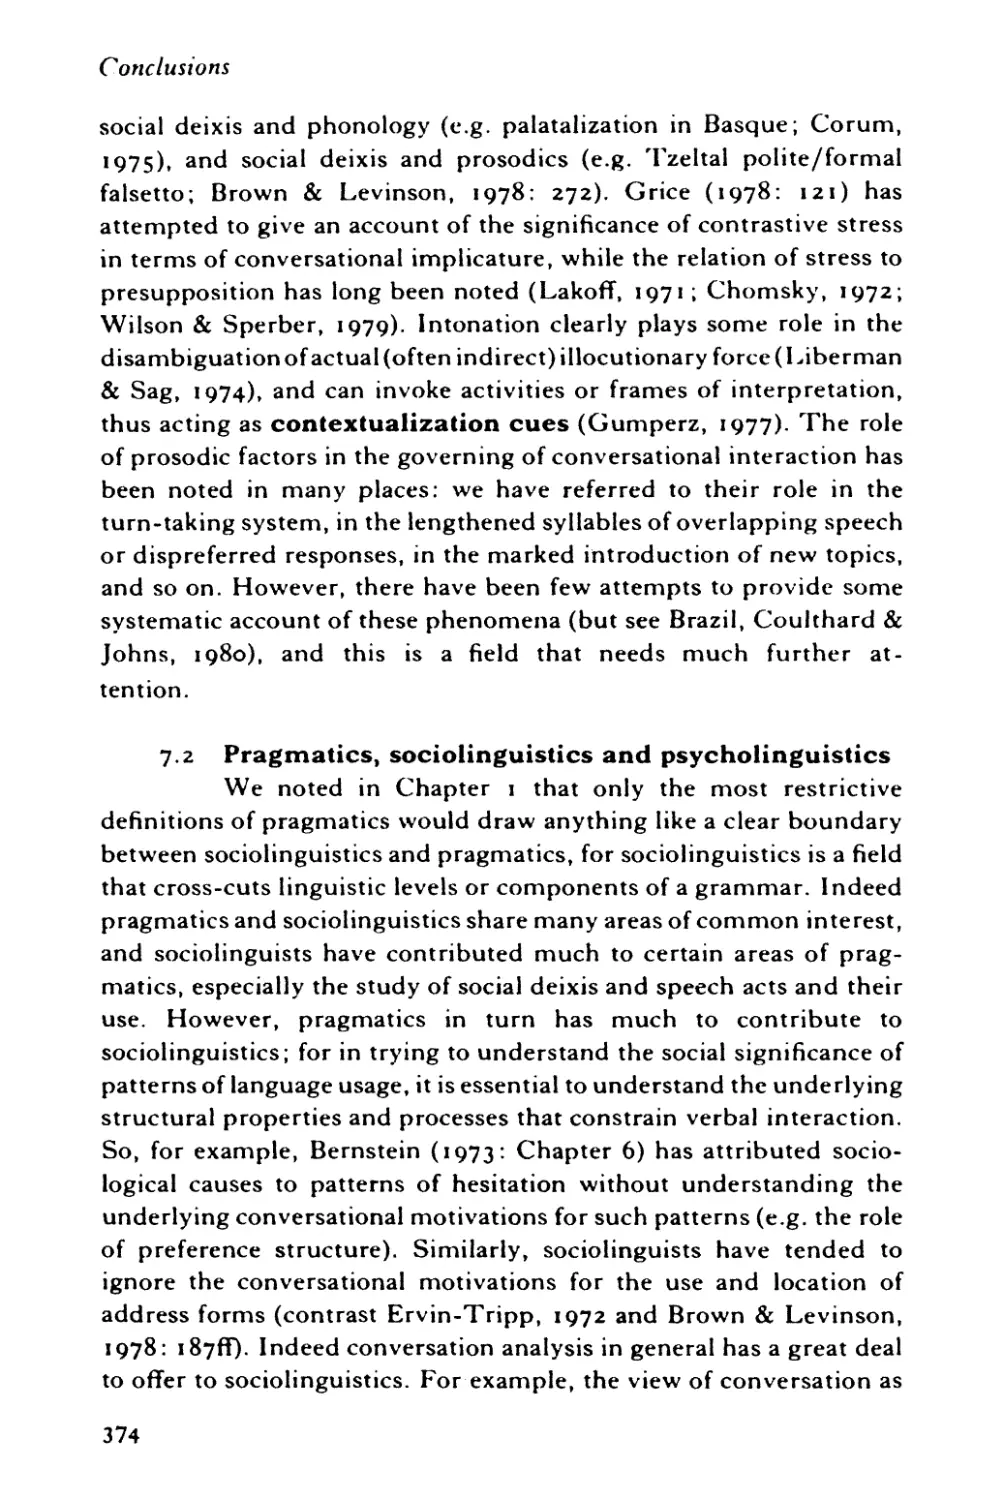 7.2 Pragmatics, sociolinguistics and psycholinguistics